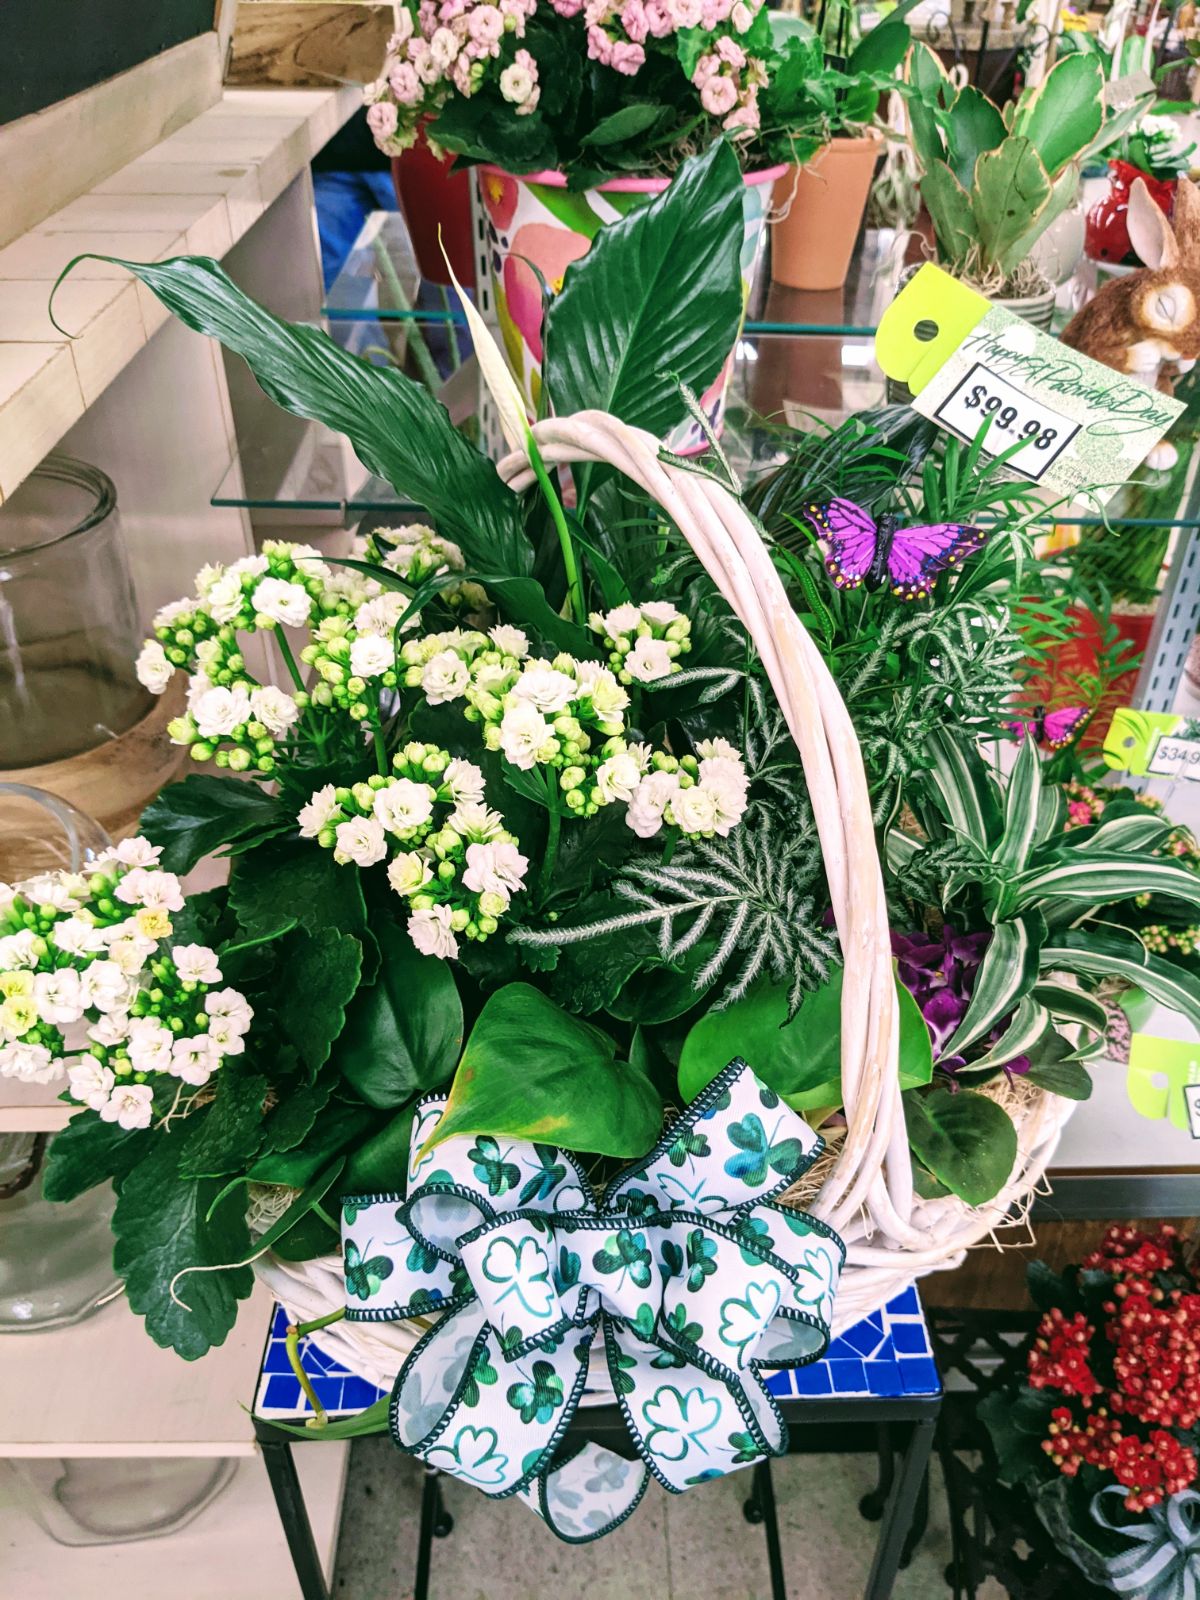 Giant Irish flower centerpiece arrangement in a basket for St. Patrick's Day, at Wendy's Flowers in Gilbertsville